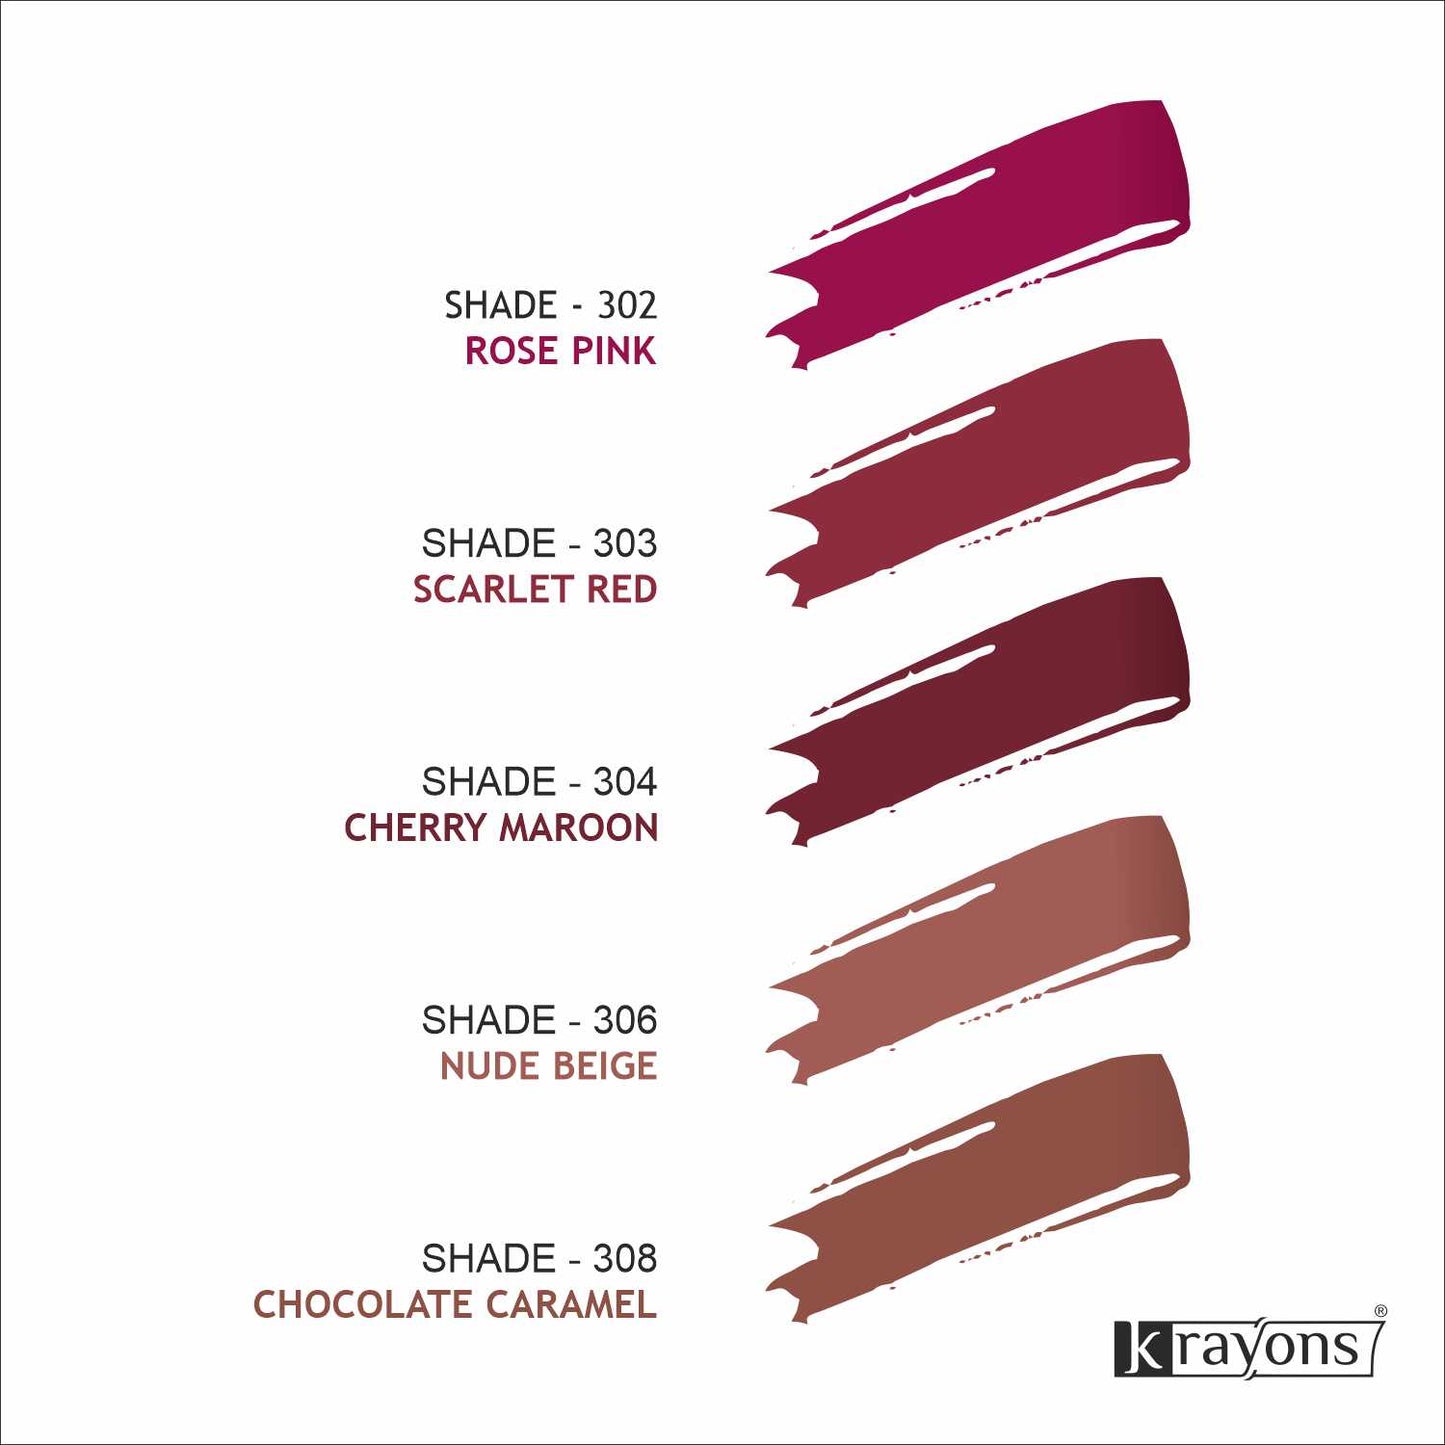 Krayons Intense Matte Lipstick, Waterproof, Longlasting, Rode Red, Scarlet Red, Cherry Maroon, 3.5gm Each (Pack of 3)